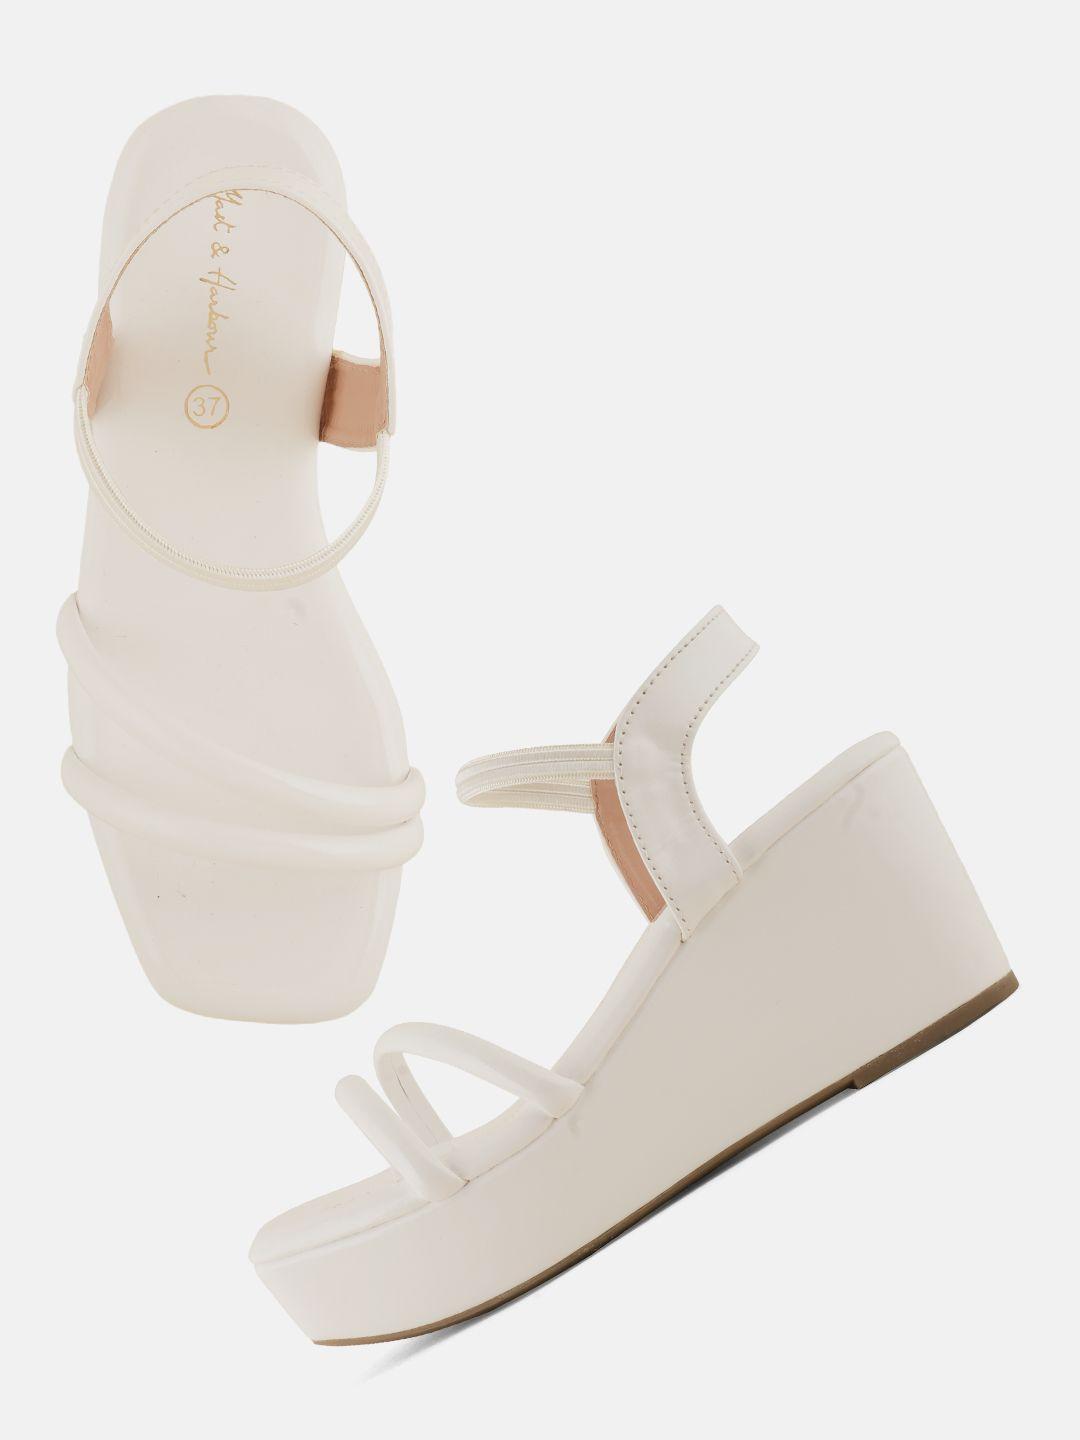 mast-&-harbour-white-open-toe-backstrap-wedge-heels